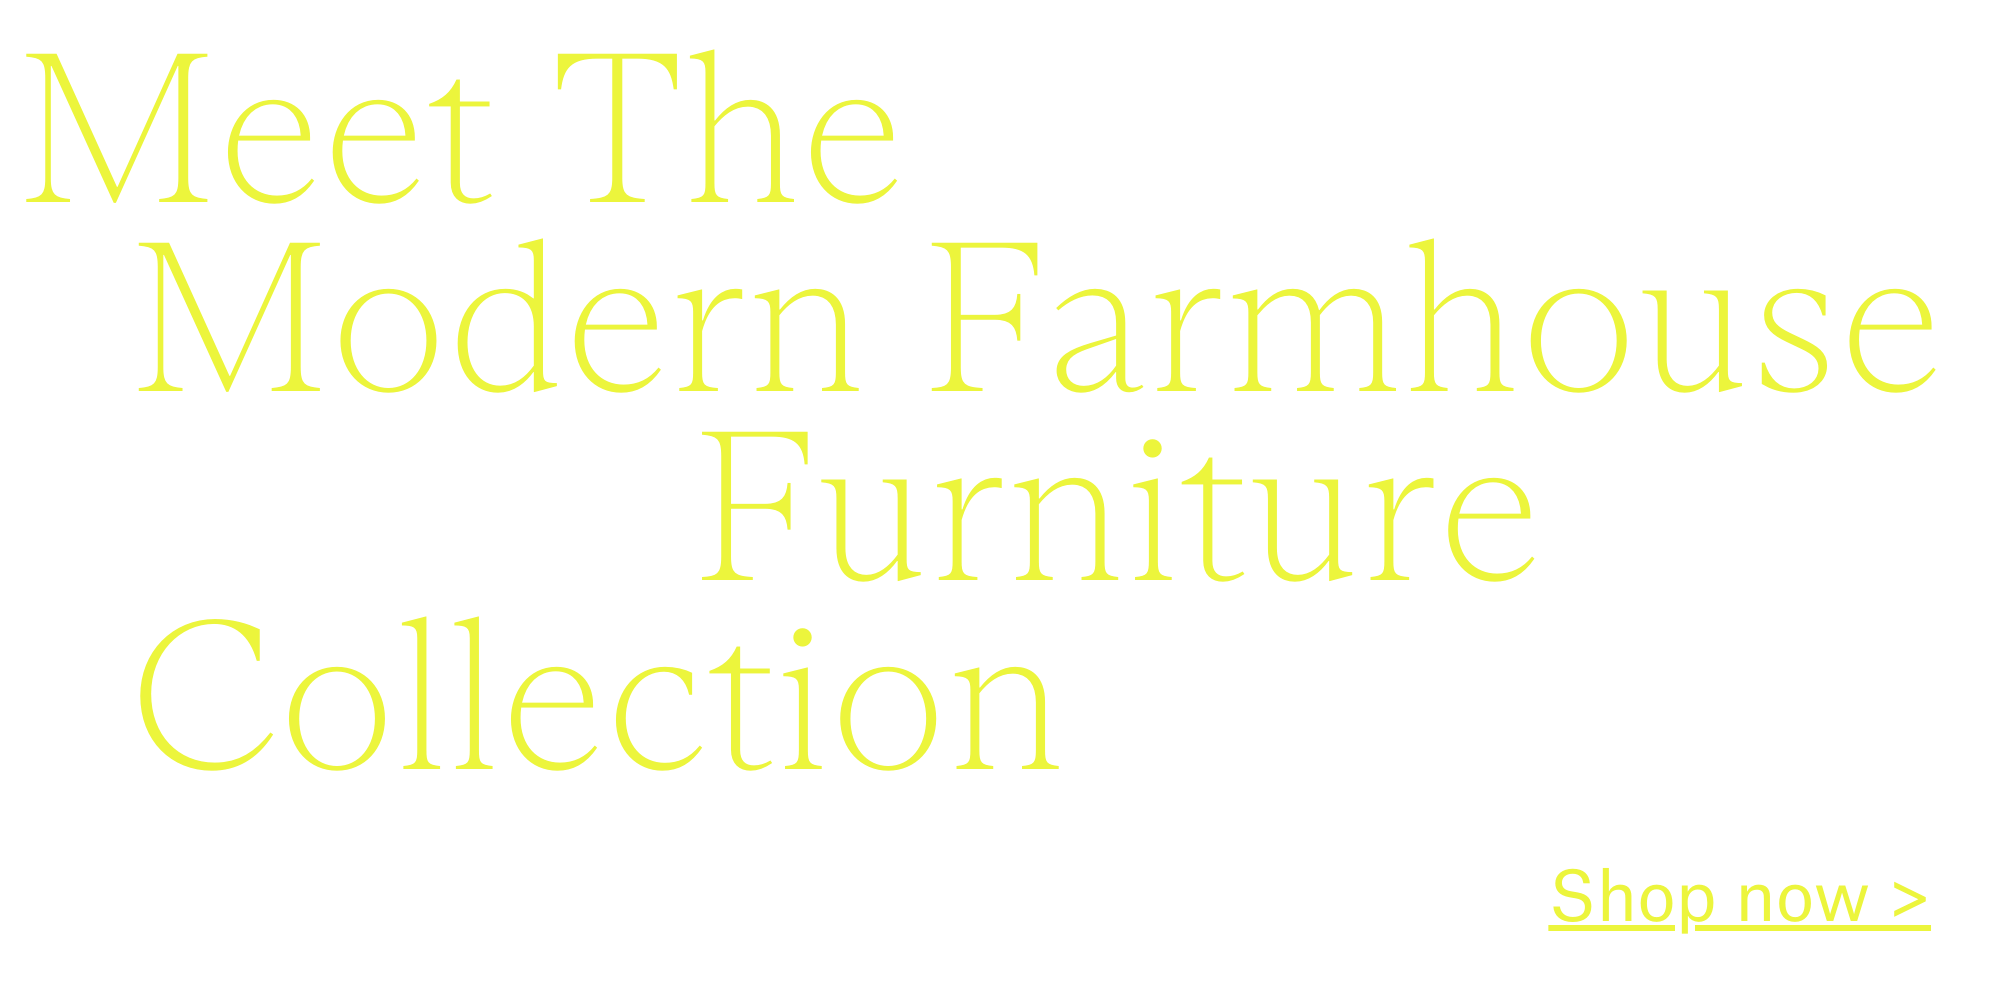 Meet the Modern Farmhouse Collection